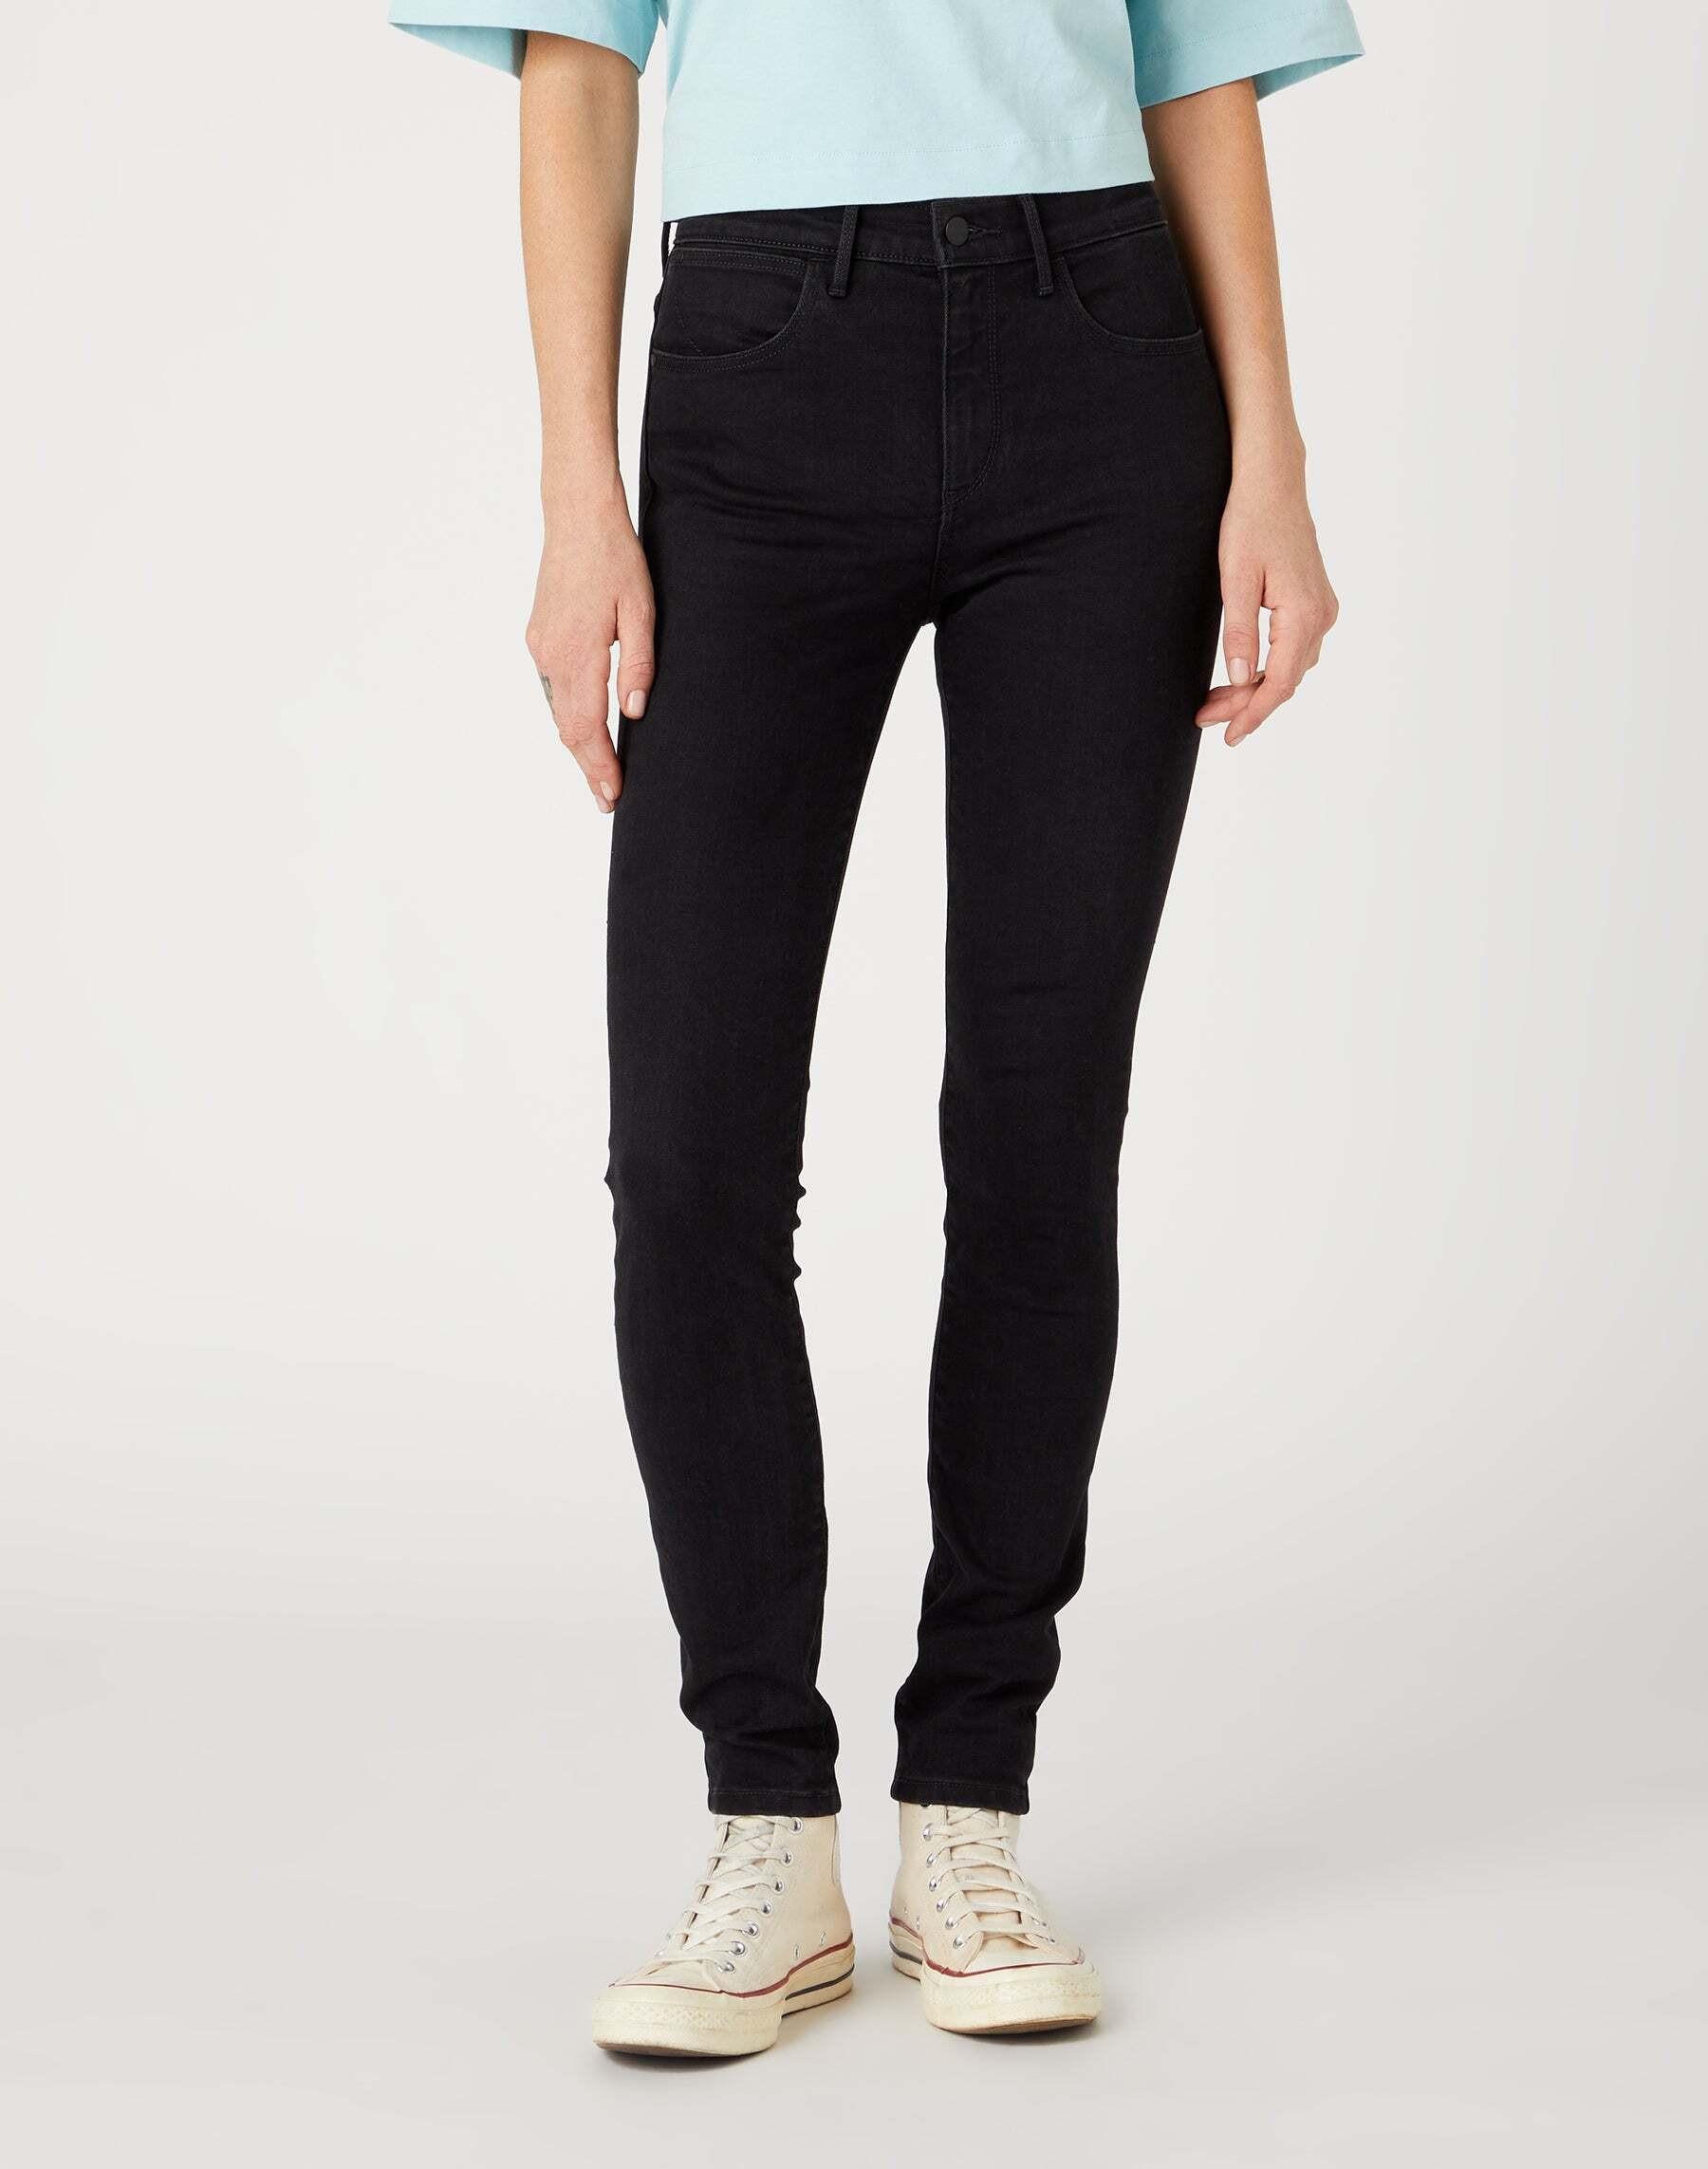 Jeans High Skinny Damen Schwarz L32/W26 von Wrangler